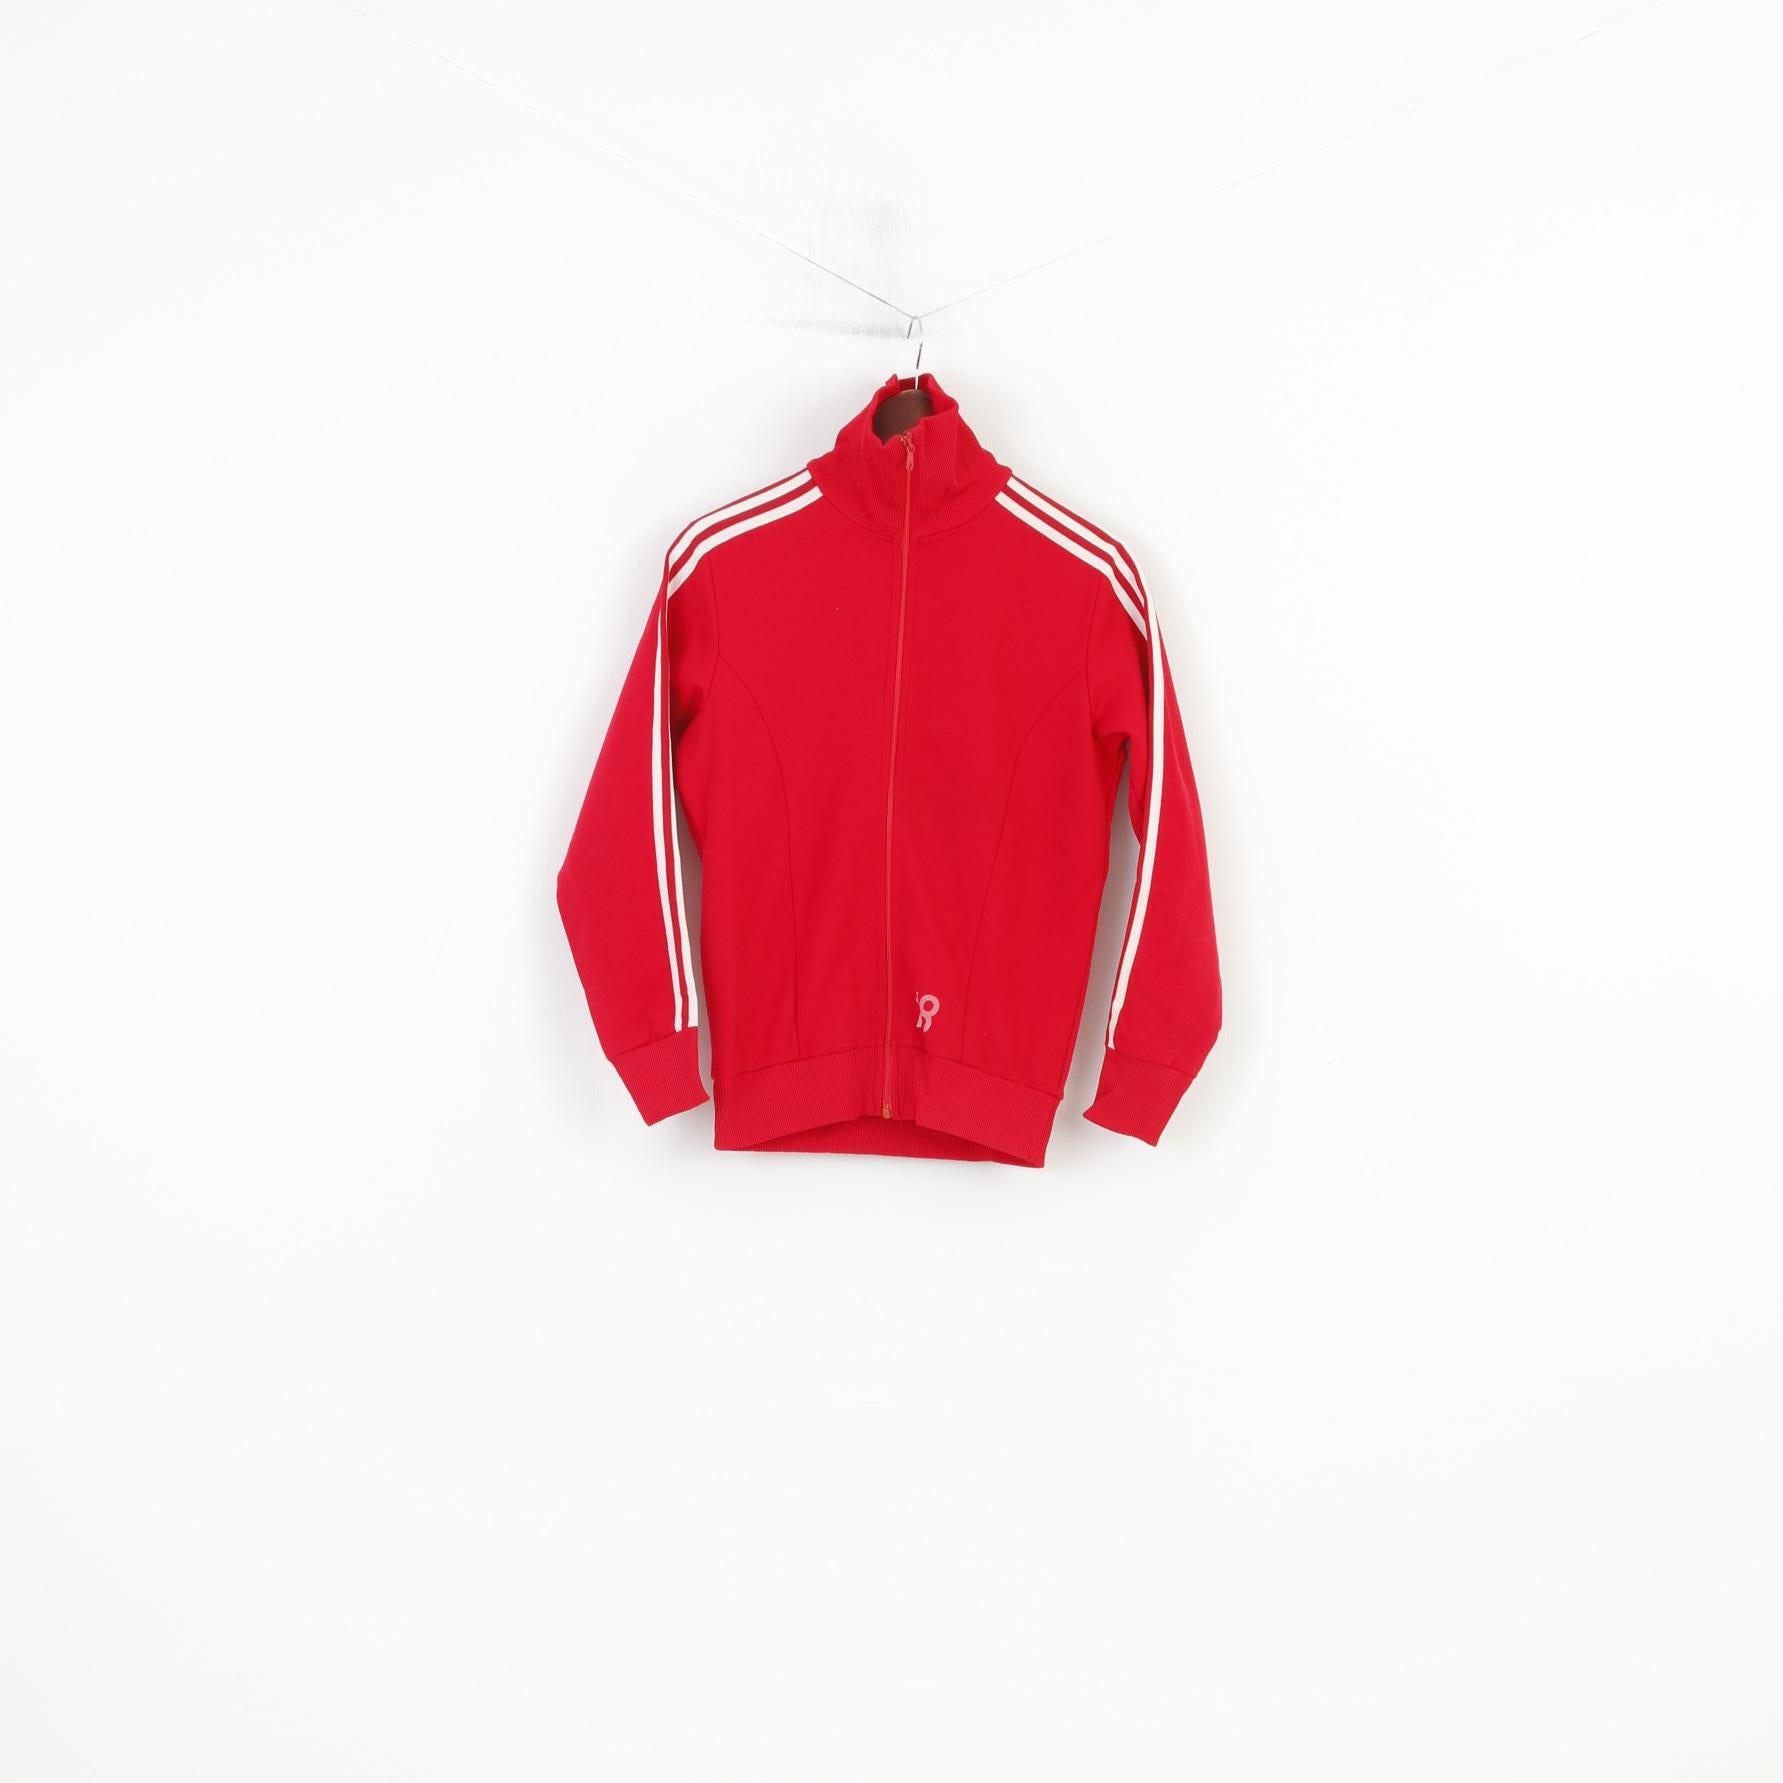  Adidas Women 44 M Sweatshirt Olympic Montreal 1976 Red Stretch Sportswear Yugoslavia Vintage Full Zipper Top